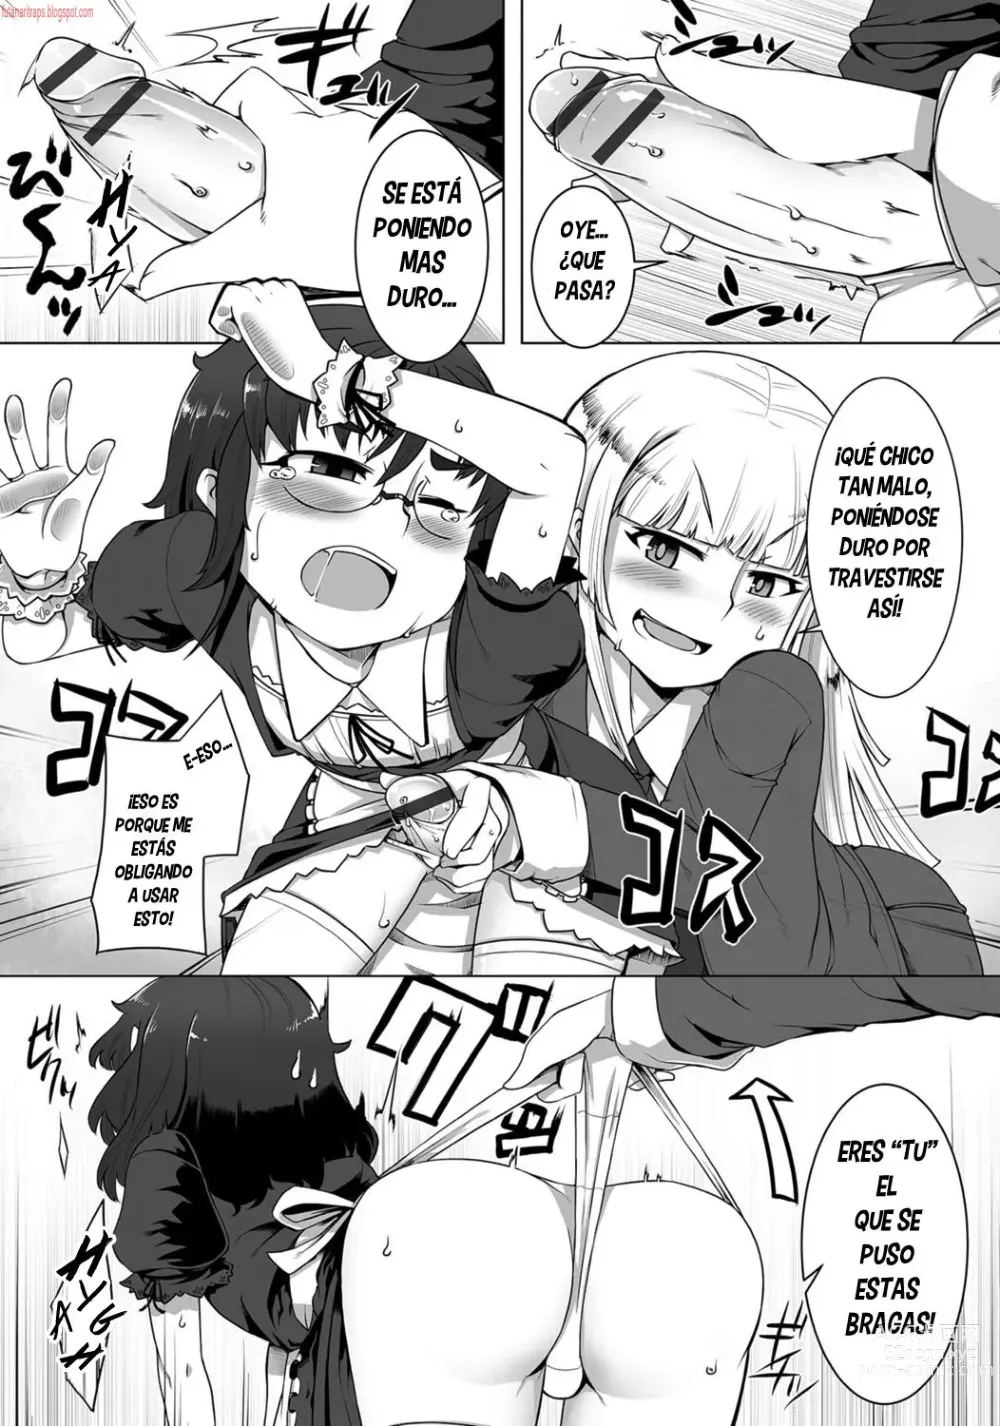 Page 6 of manga Amaneku Subete o Kimi ni!